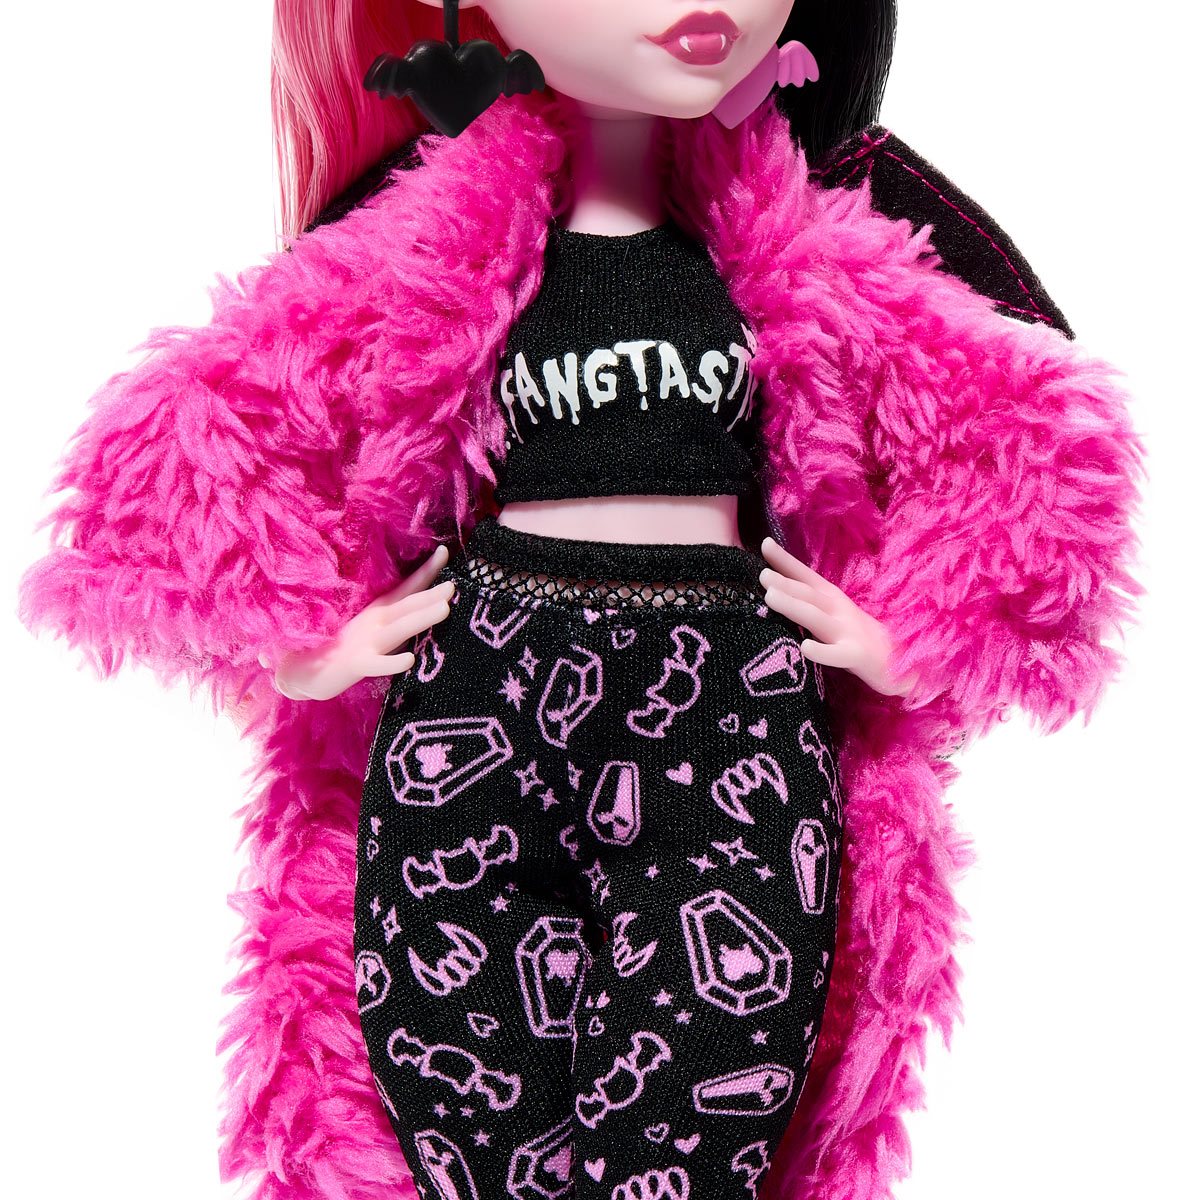 Polly Pocket Monster High Sleepover Frankie Stein Doll